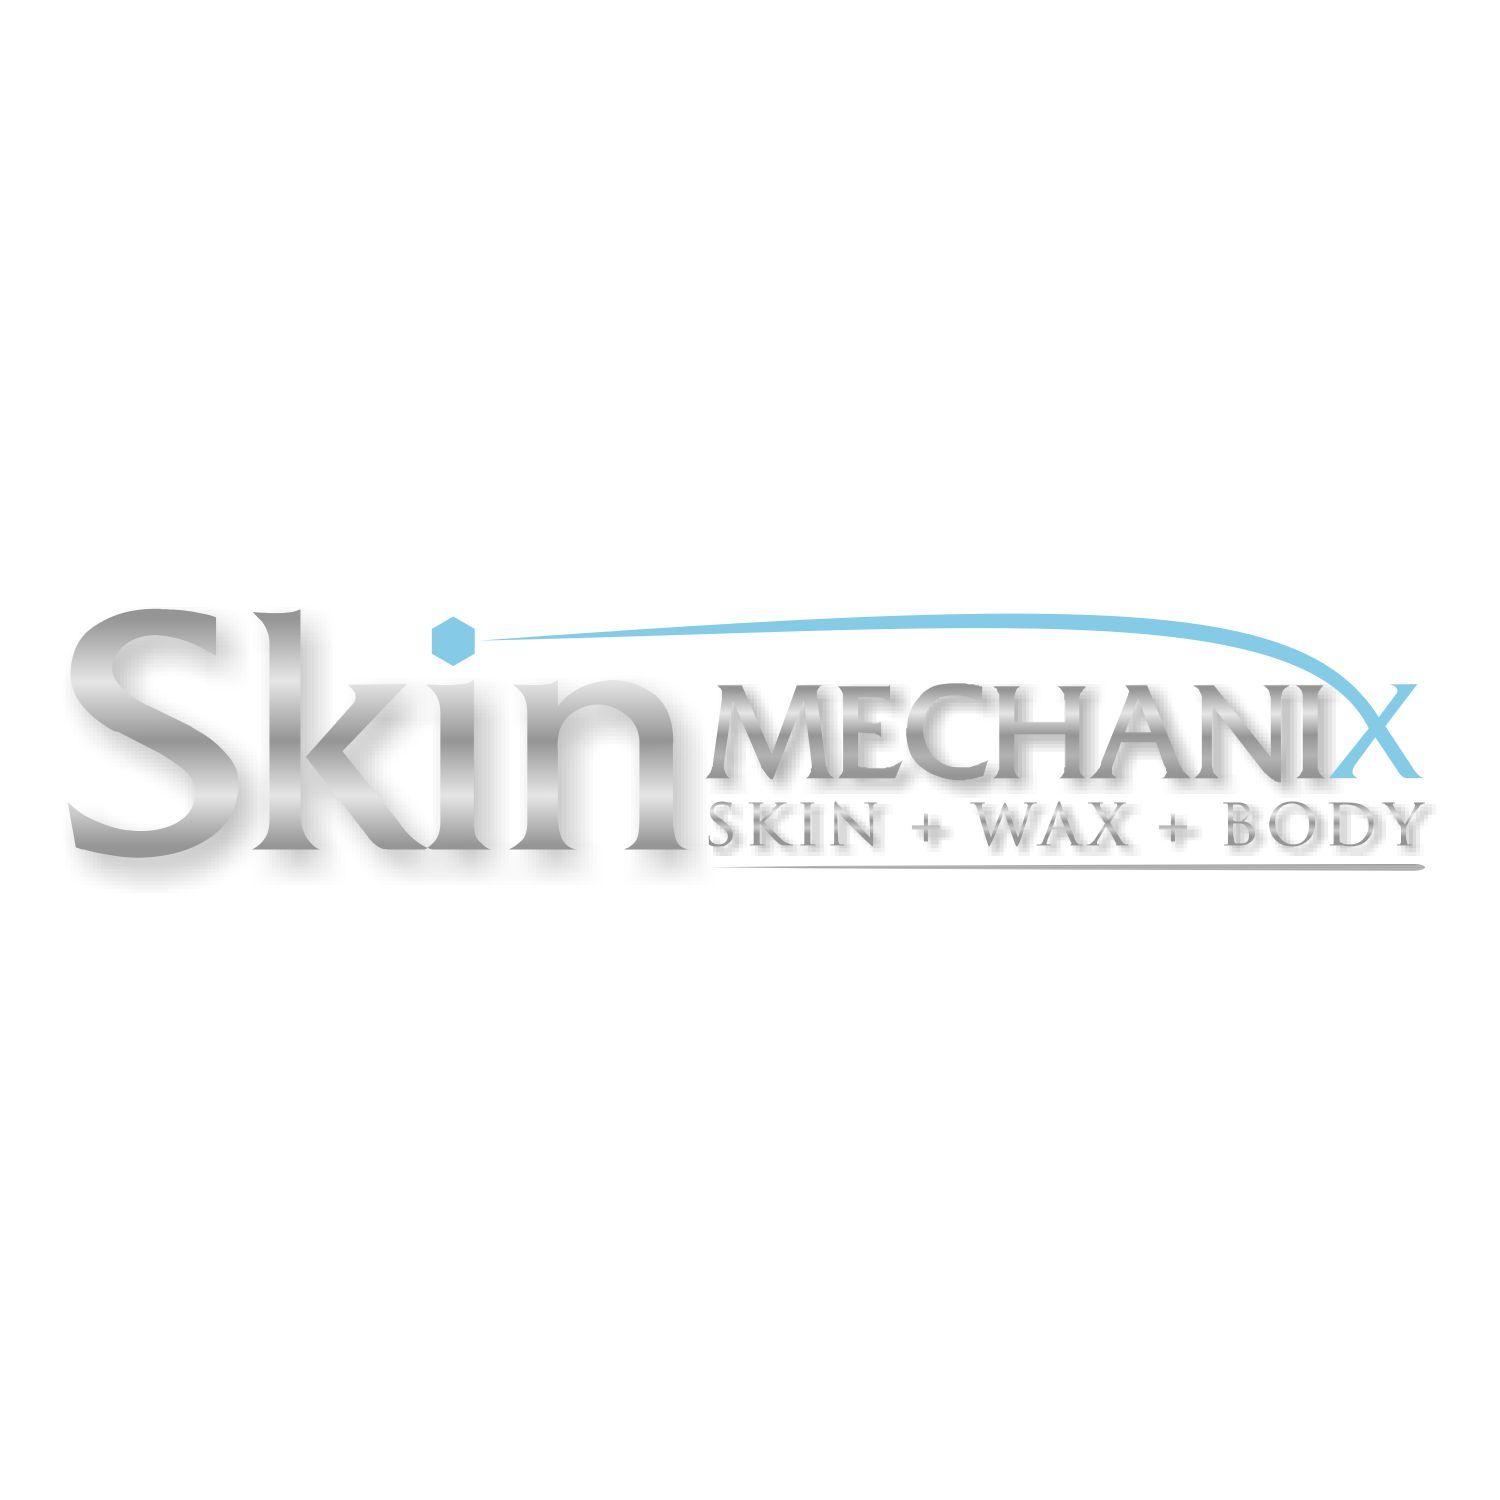 Mechanix Logo - Elegant, Modern, Beauty Salon Logo Design for Skin Mechanix by ...